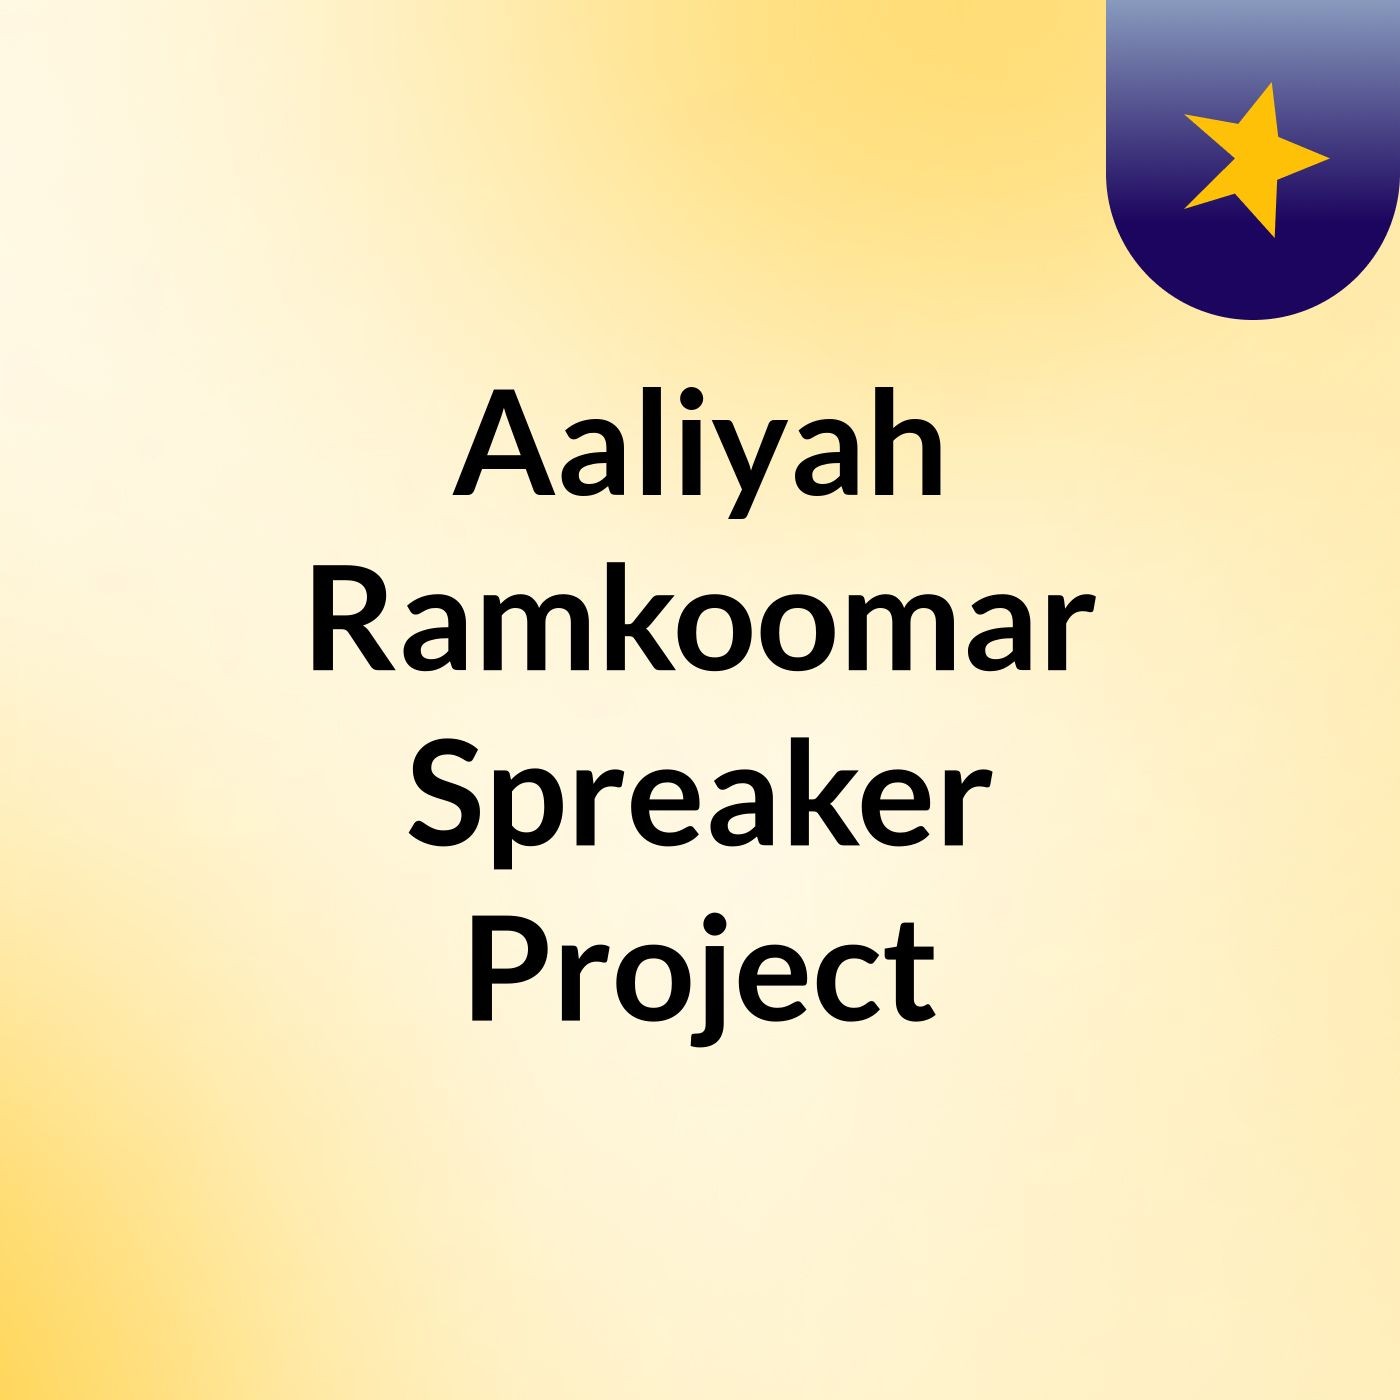 Aaliyah Ramkoomar Spreaker Project